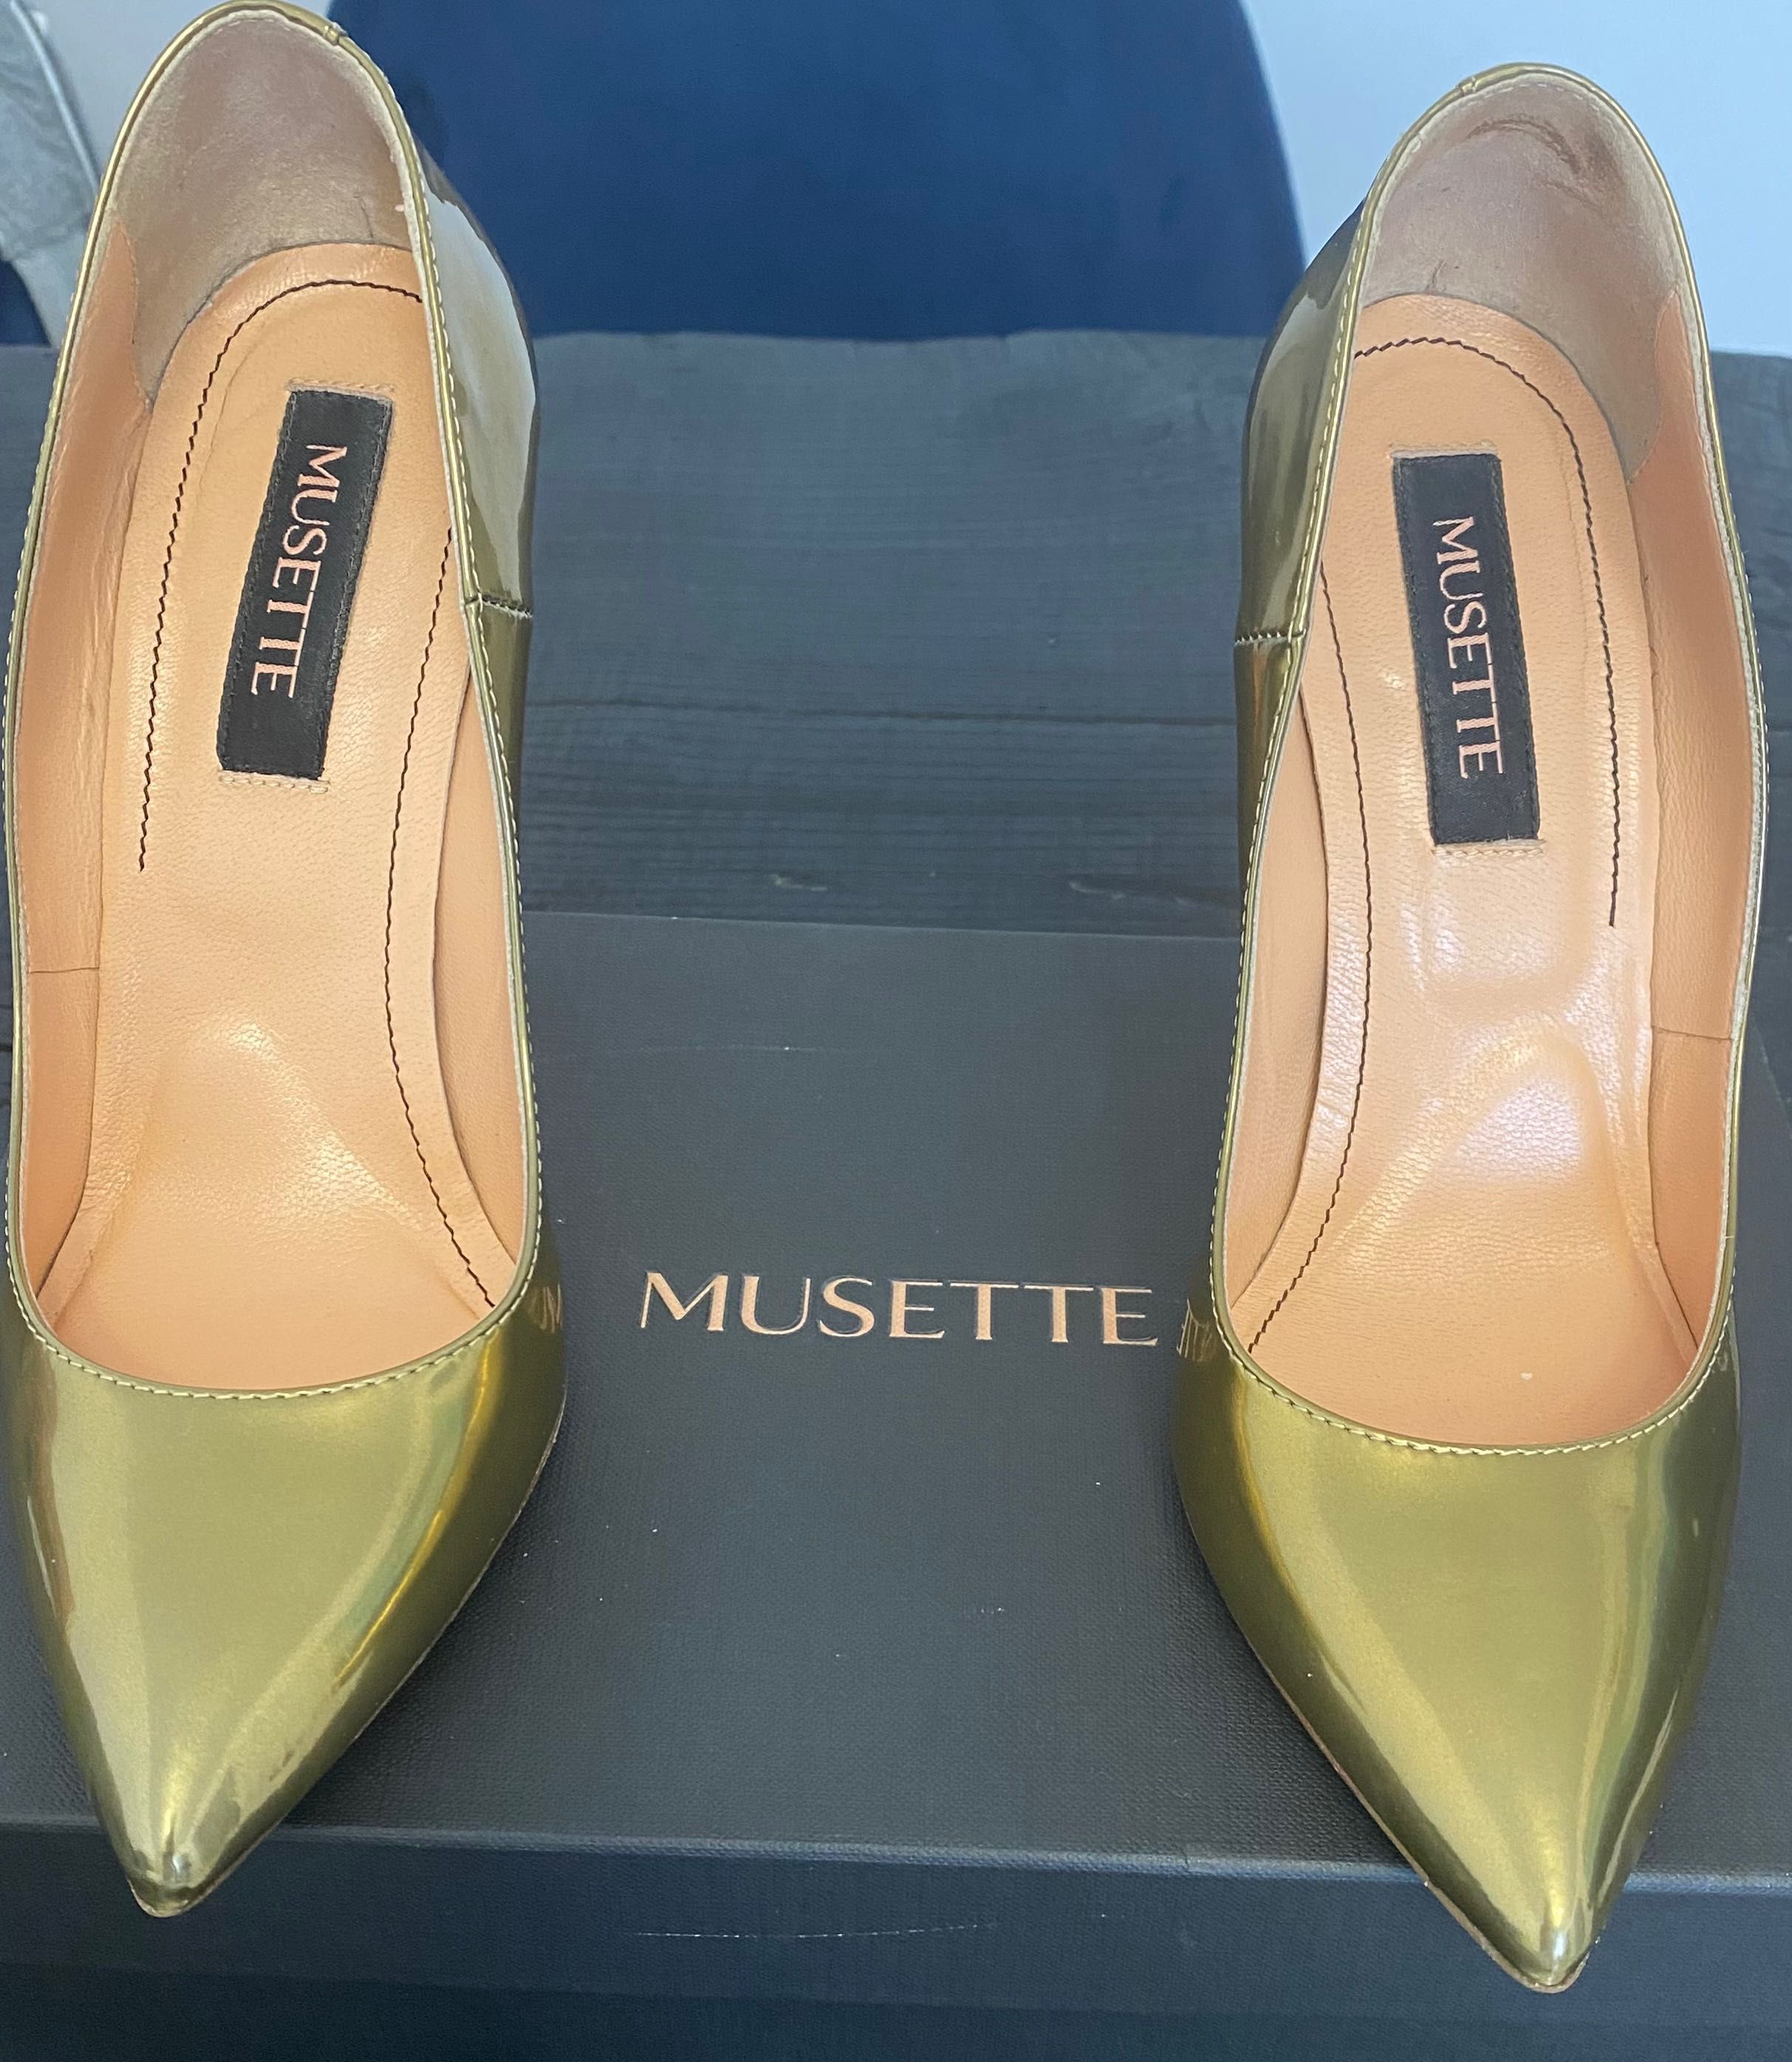 Pantofi stiletto Musette, 37, toc 10 cm, purtati o singura data